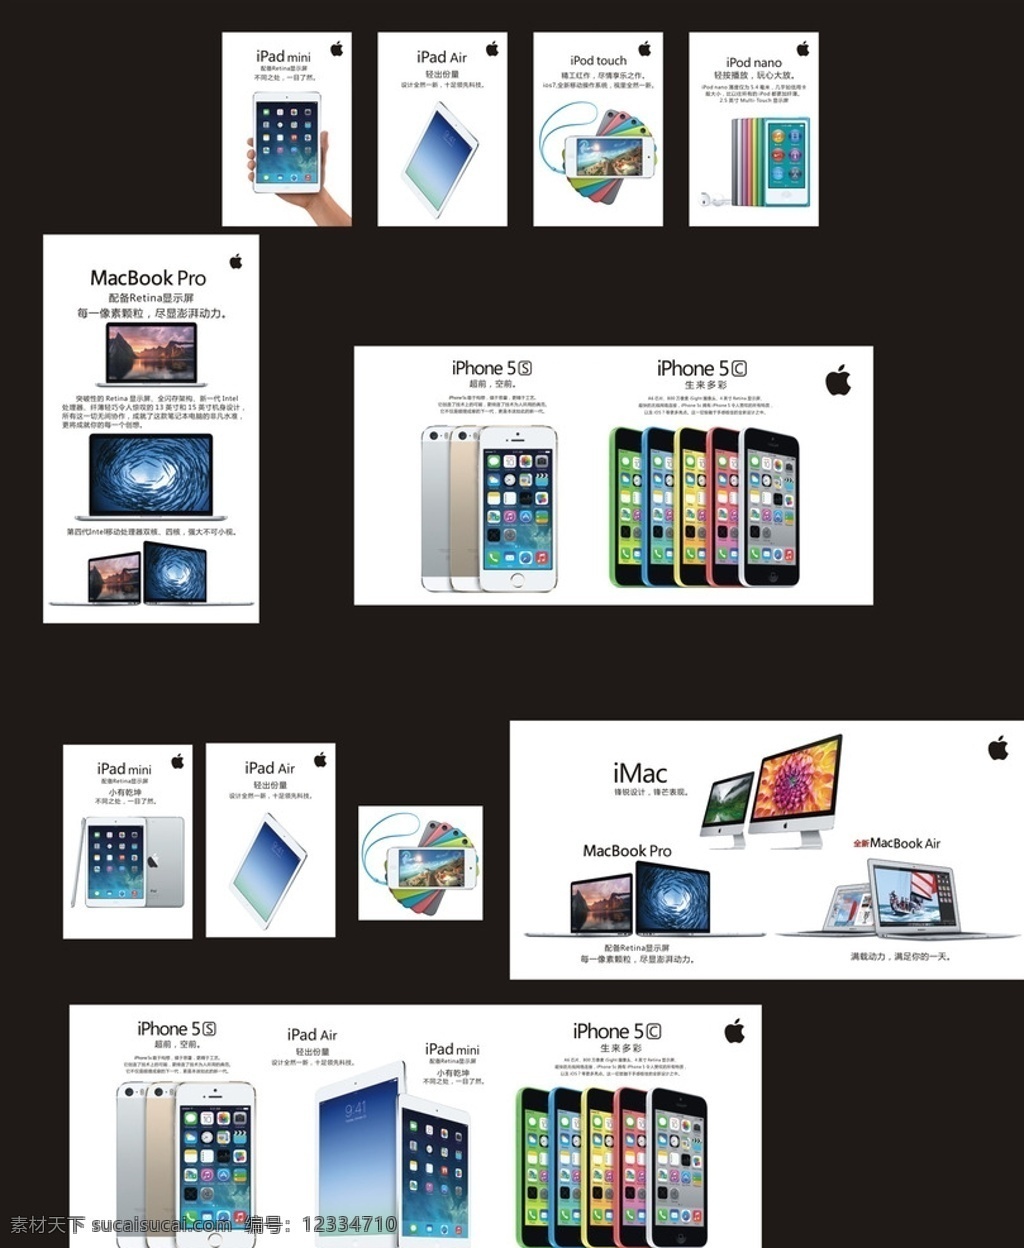 苹果海报 ipadmini ipadair ipad ipodtouch ipod ipodnano macbookpro macbook iphone5s iphone5c imac